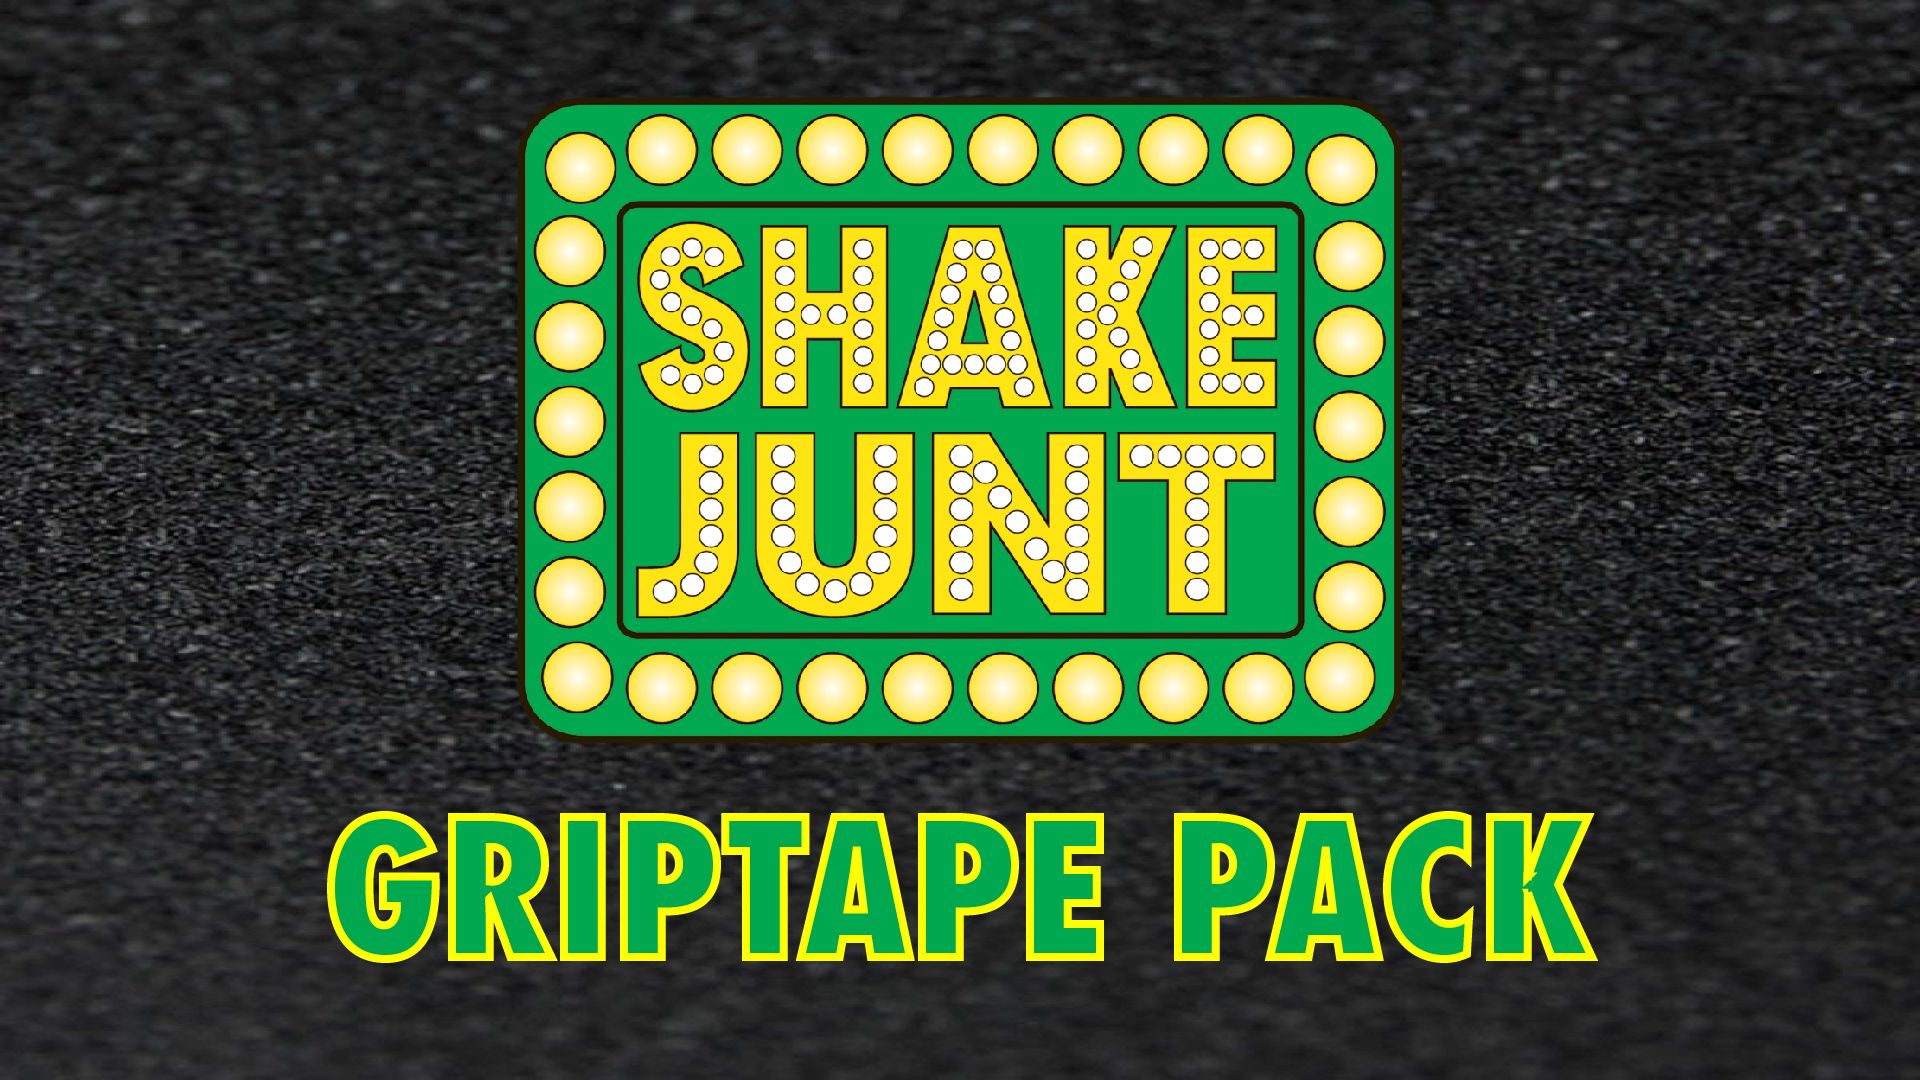 Shake Junt Wallpapers - Wallpaper Cave.